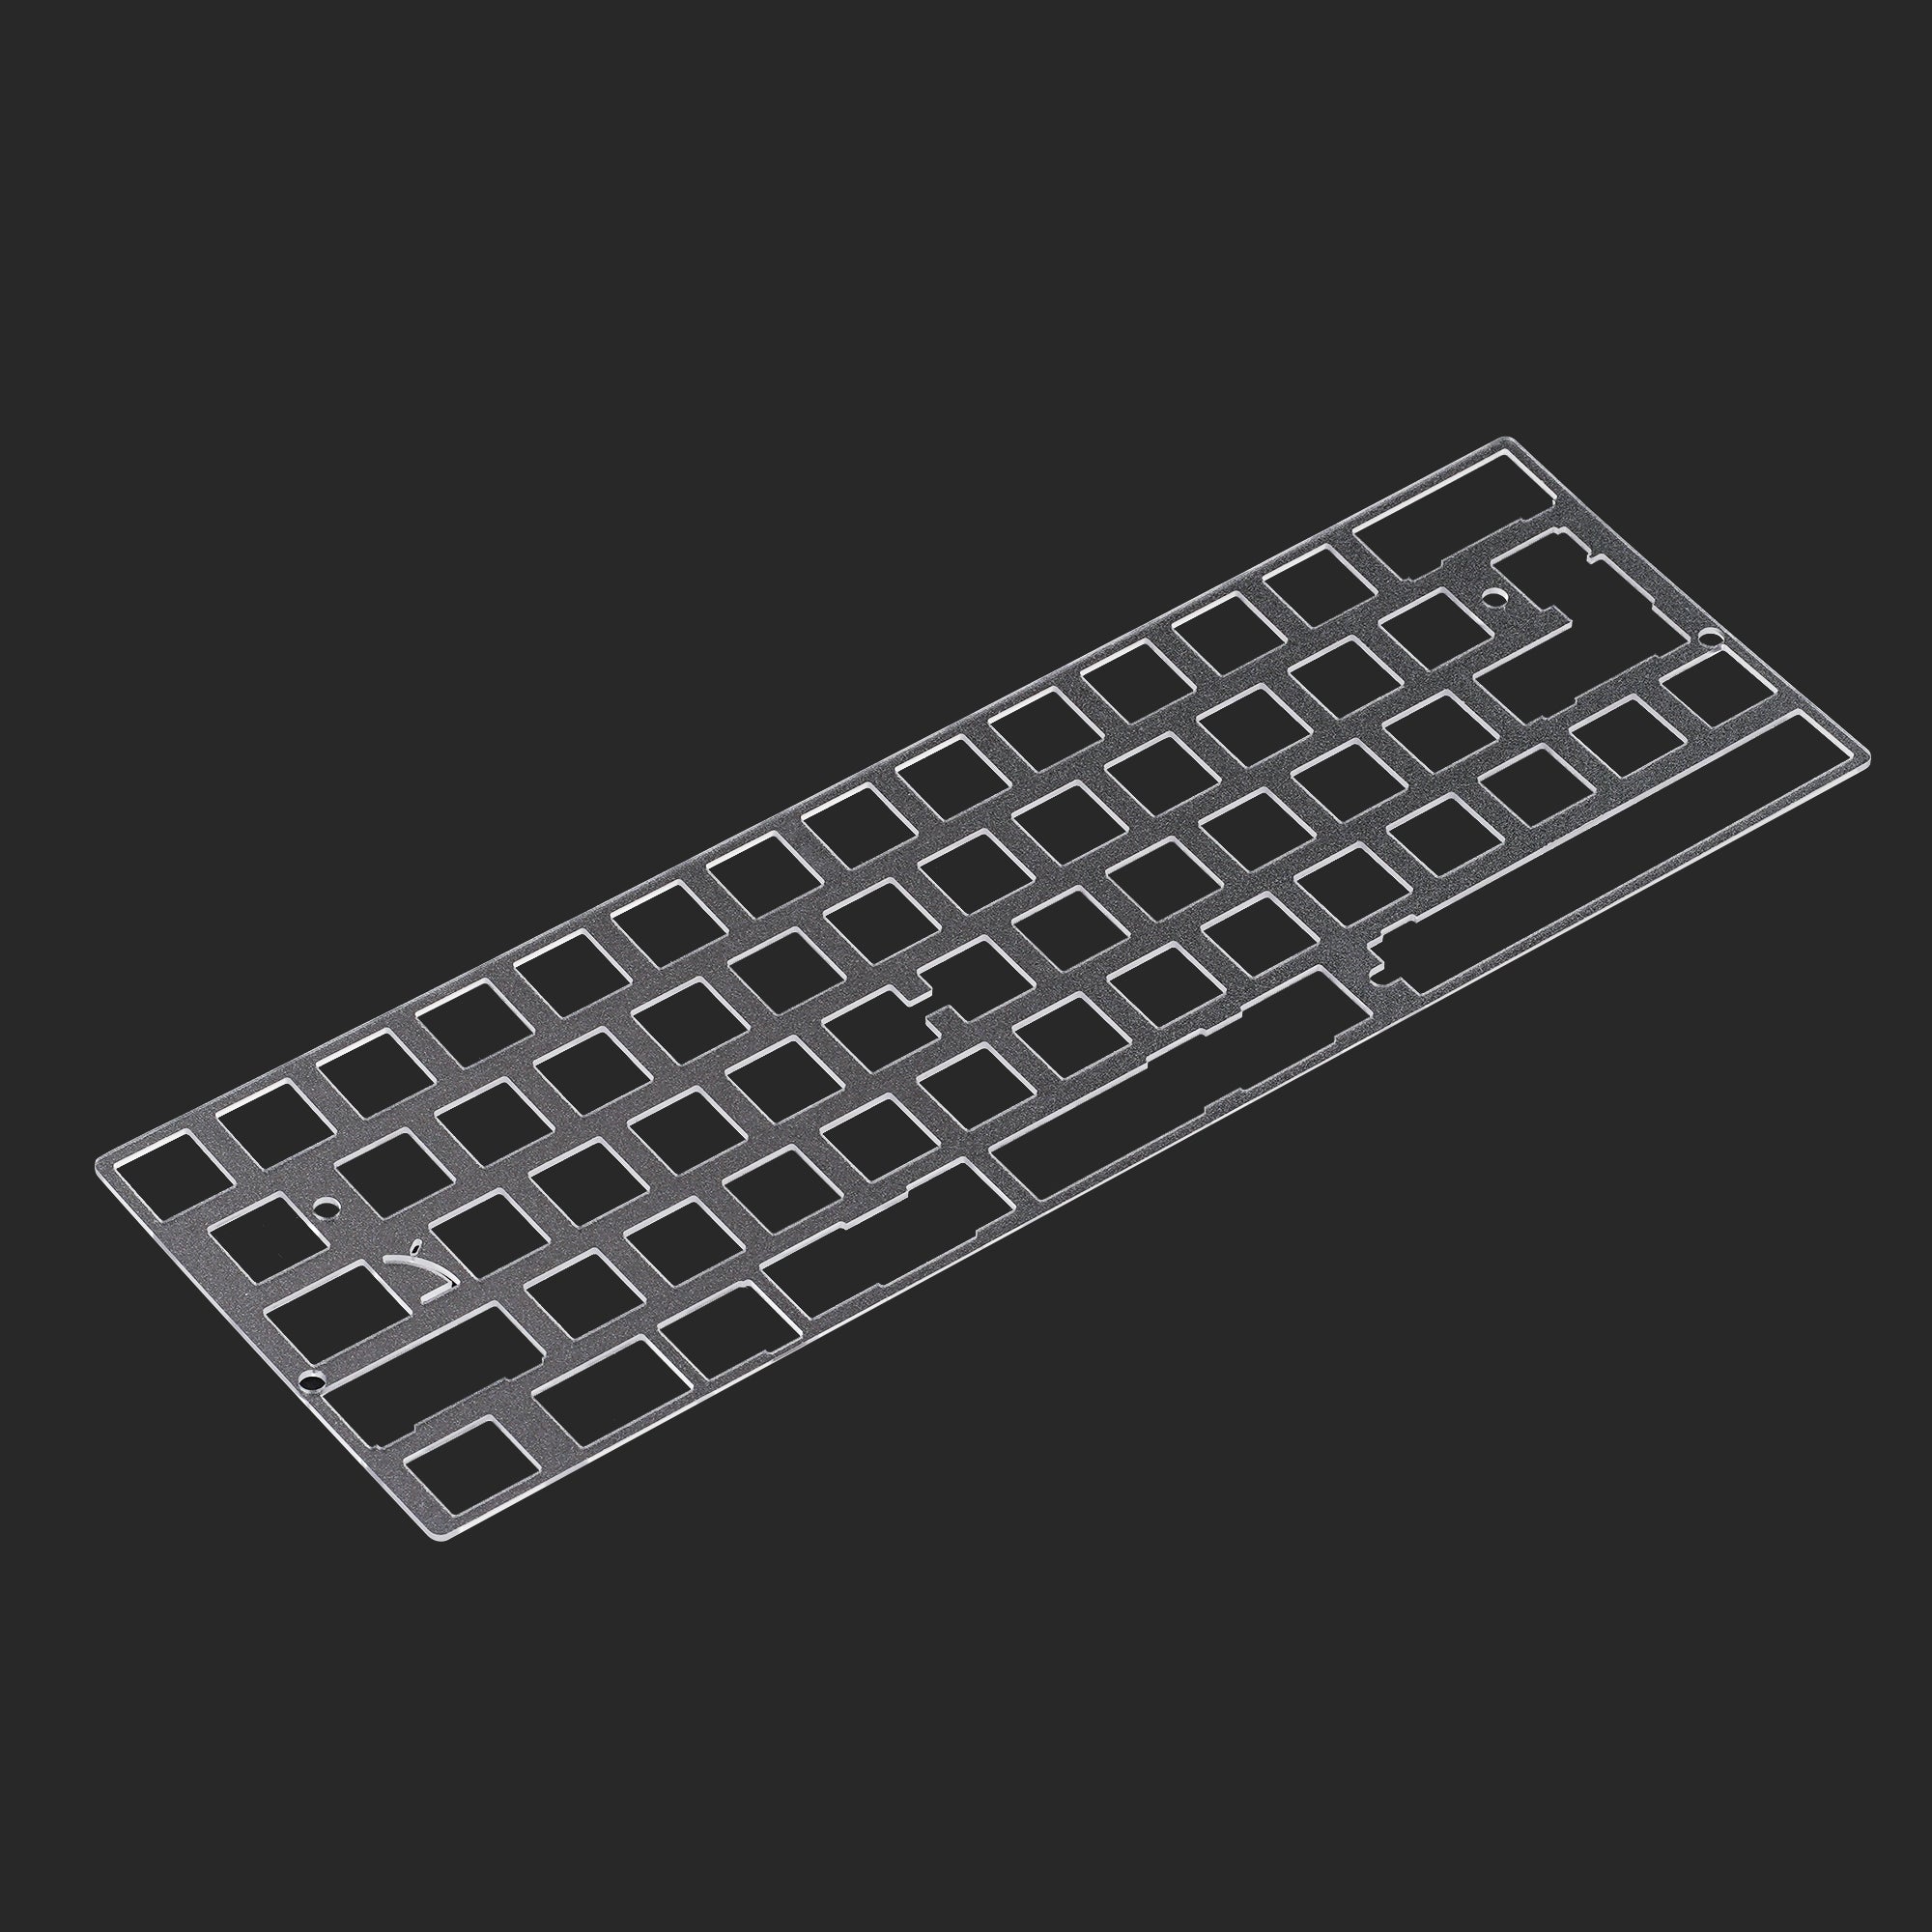 KBDfans Custom Keyboard 60% PC material plate